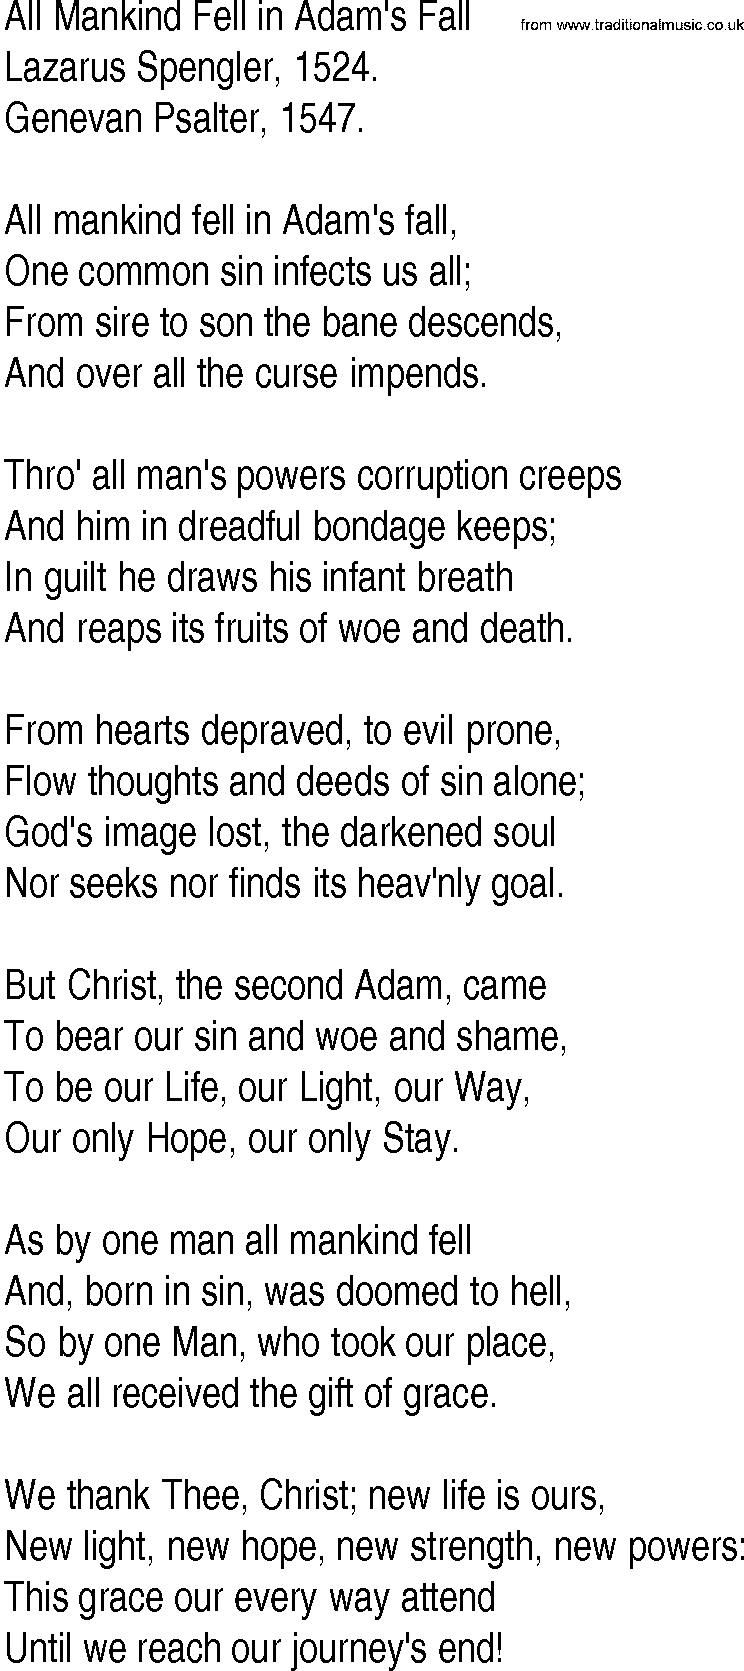 Hymn and Gospel Song: All Mankind Fell in Adam's Fall by Lazarus Spengler lyrics